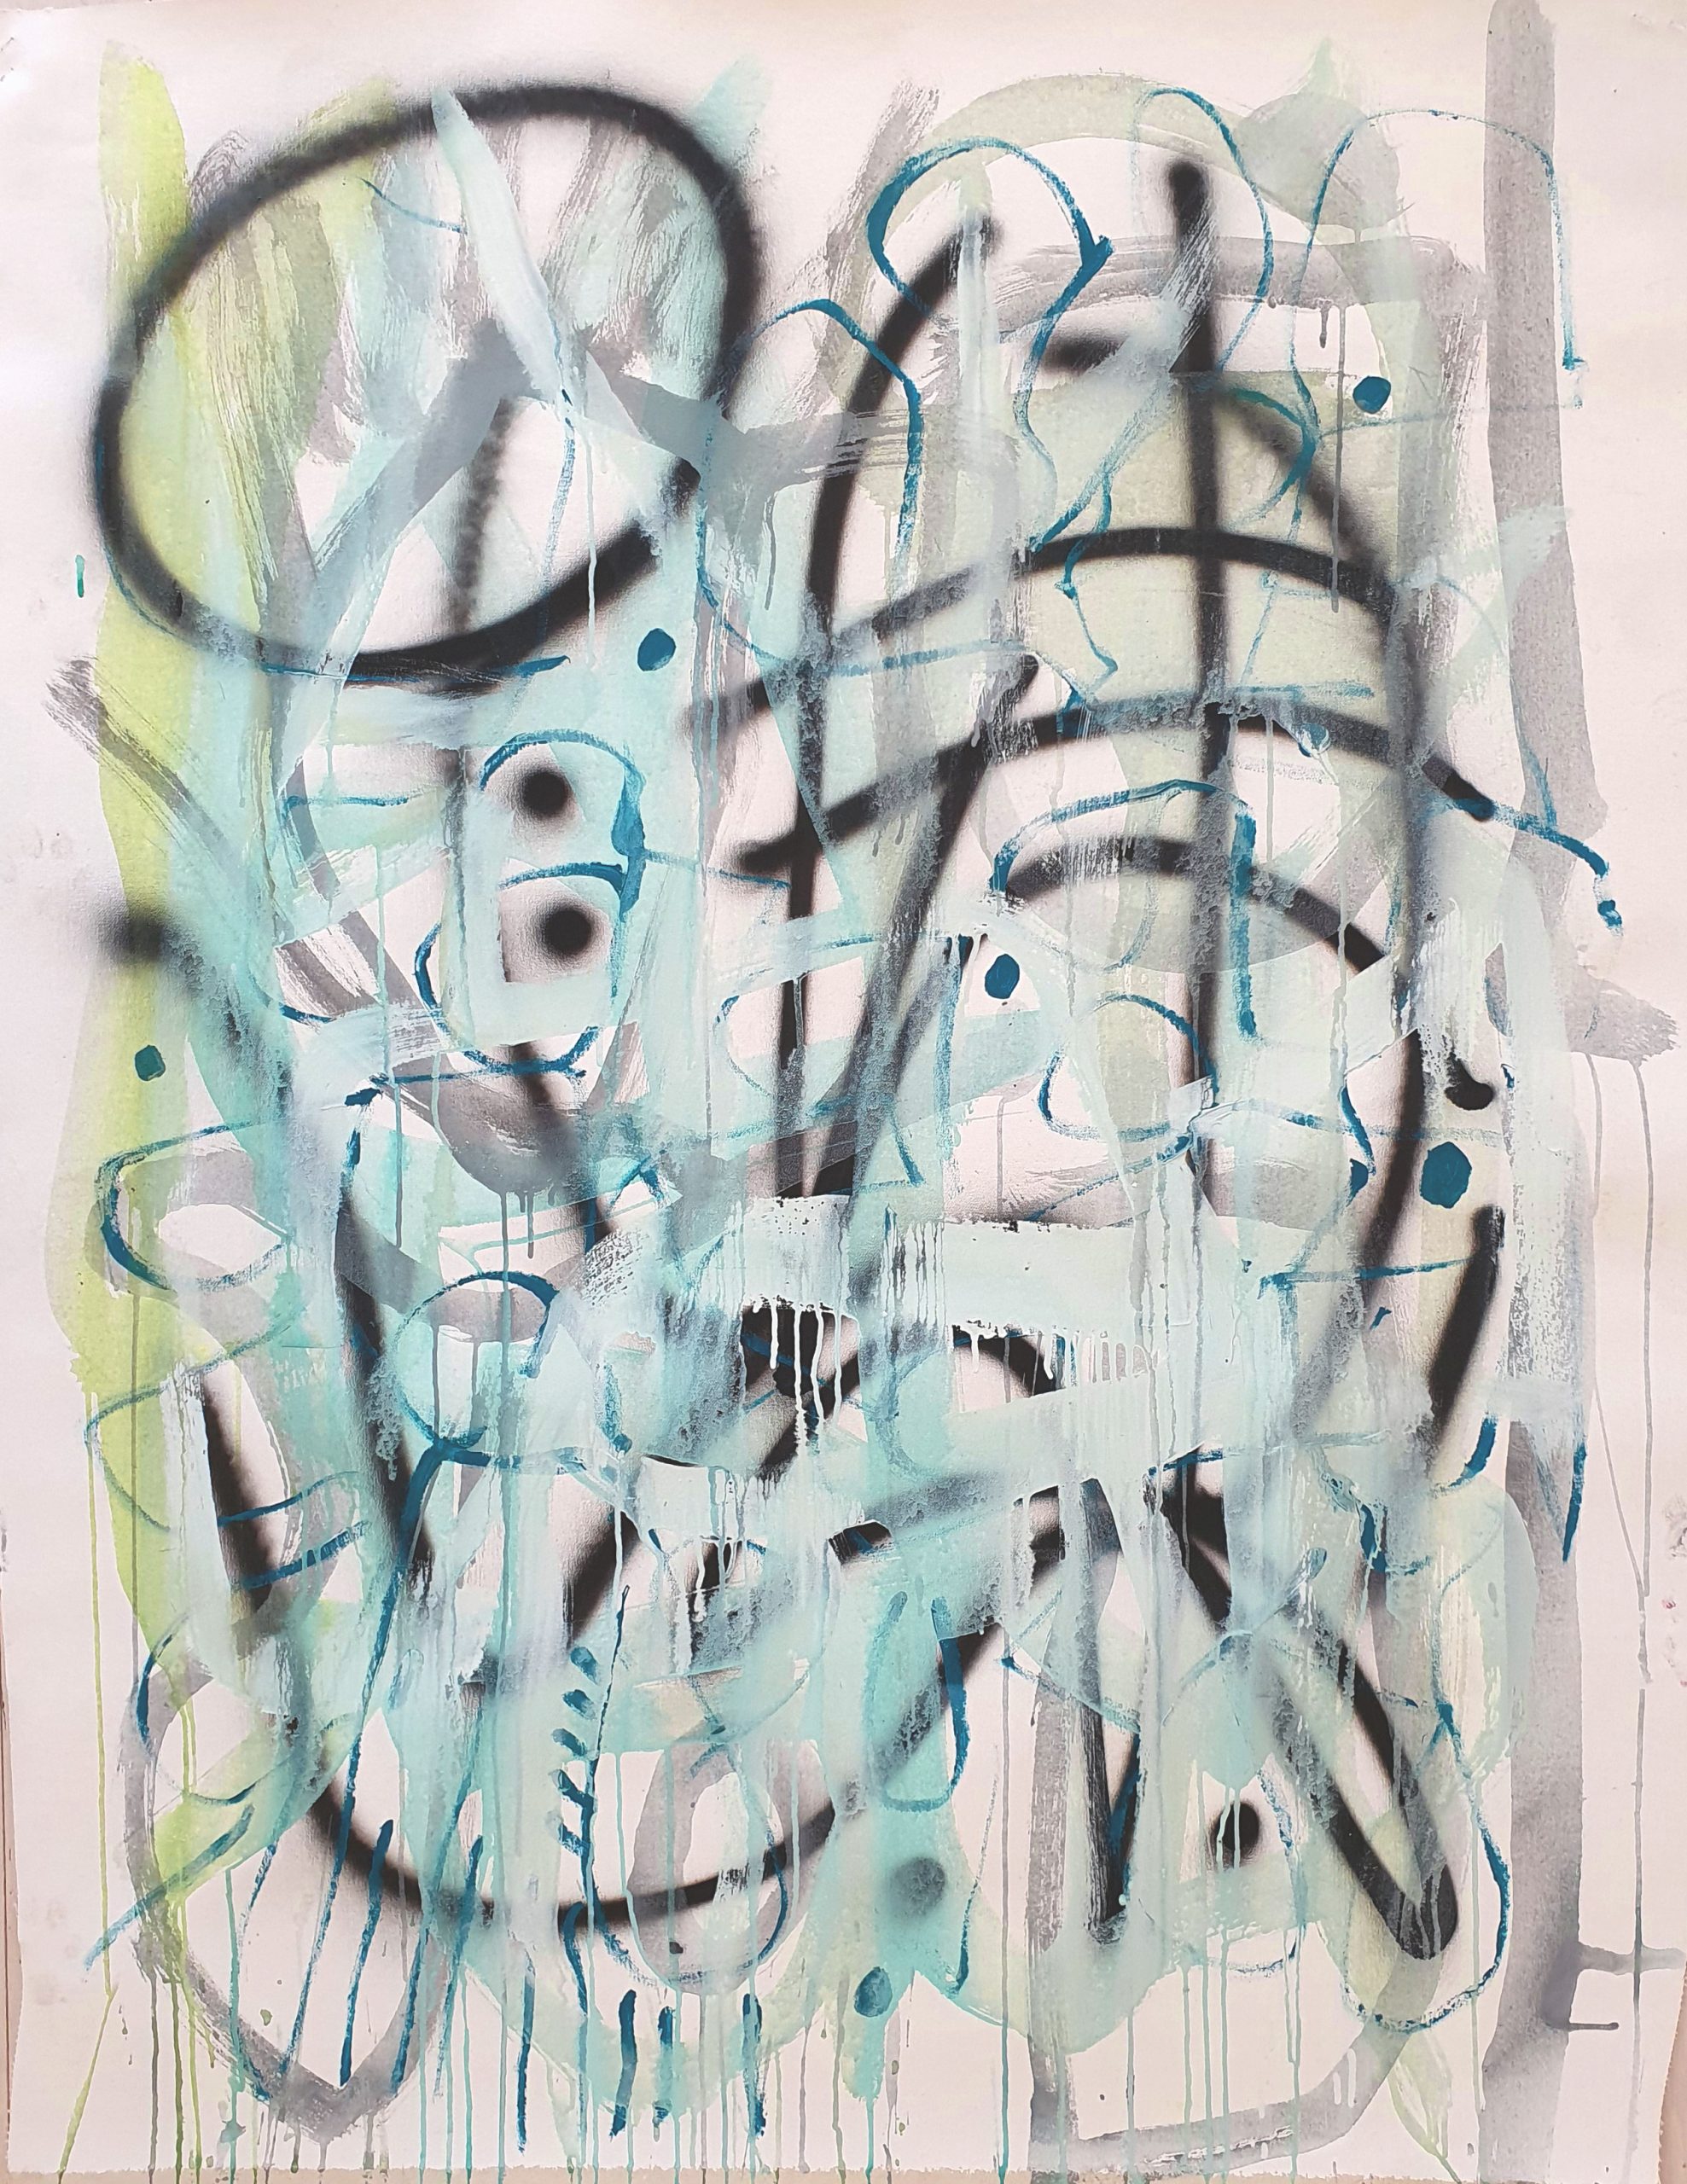 Al Poulet 'Untitled (Winter Sun)' acrylic and spraypaint on canvas 130 x 100cm $6,000